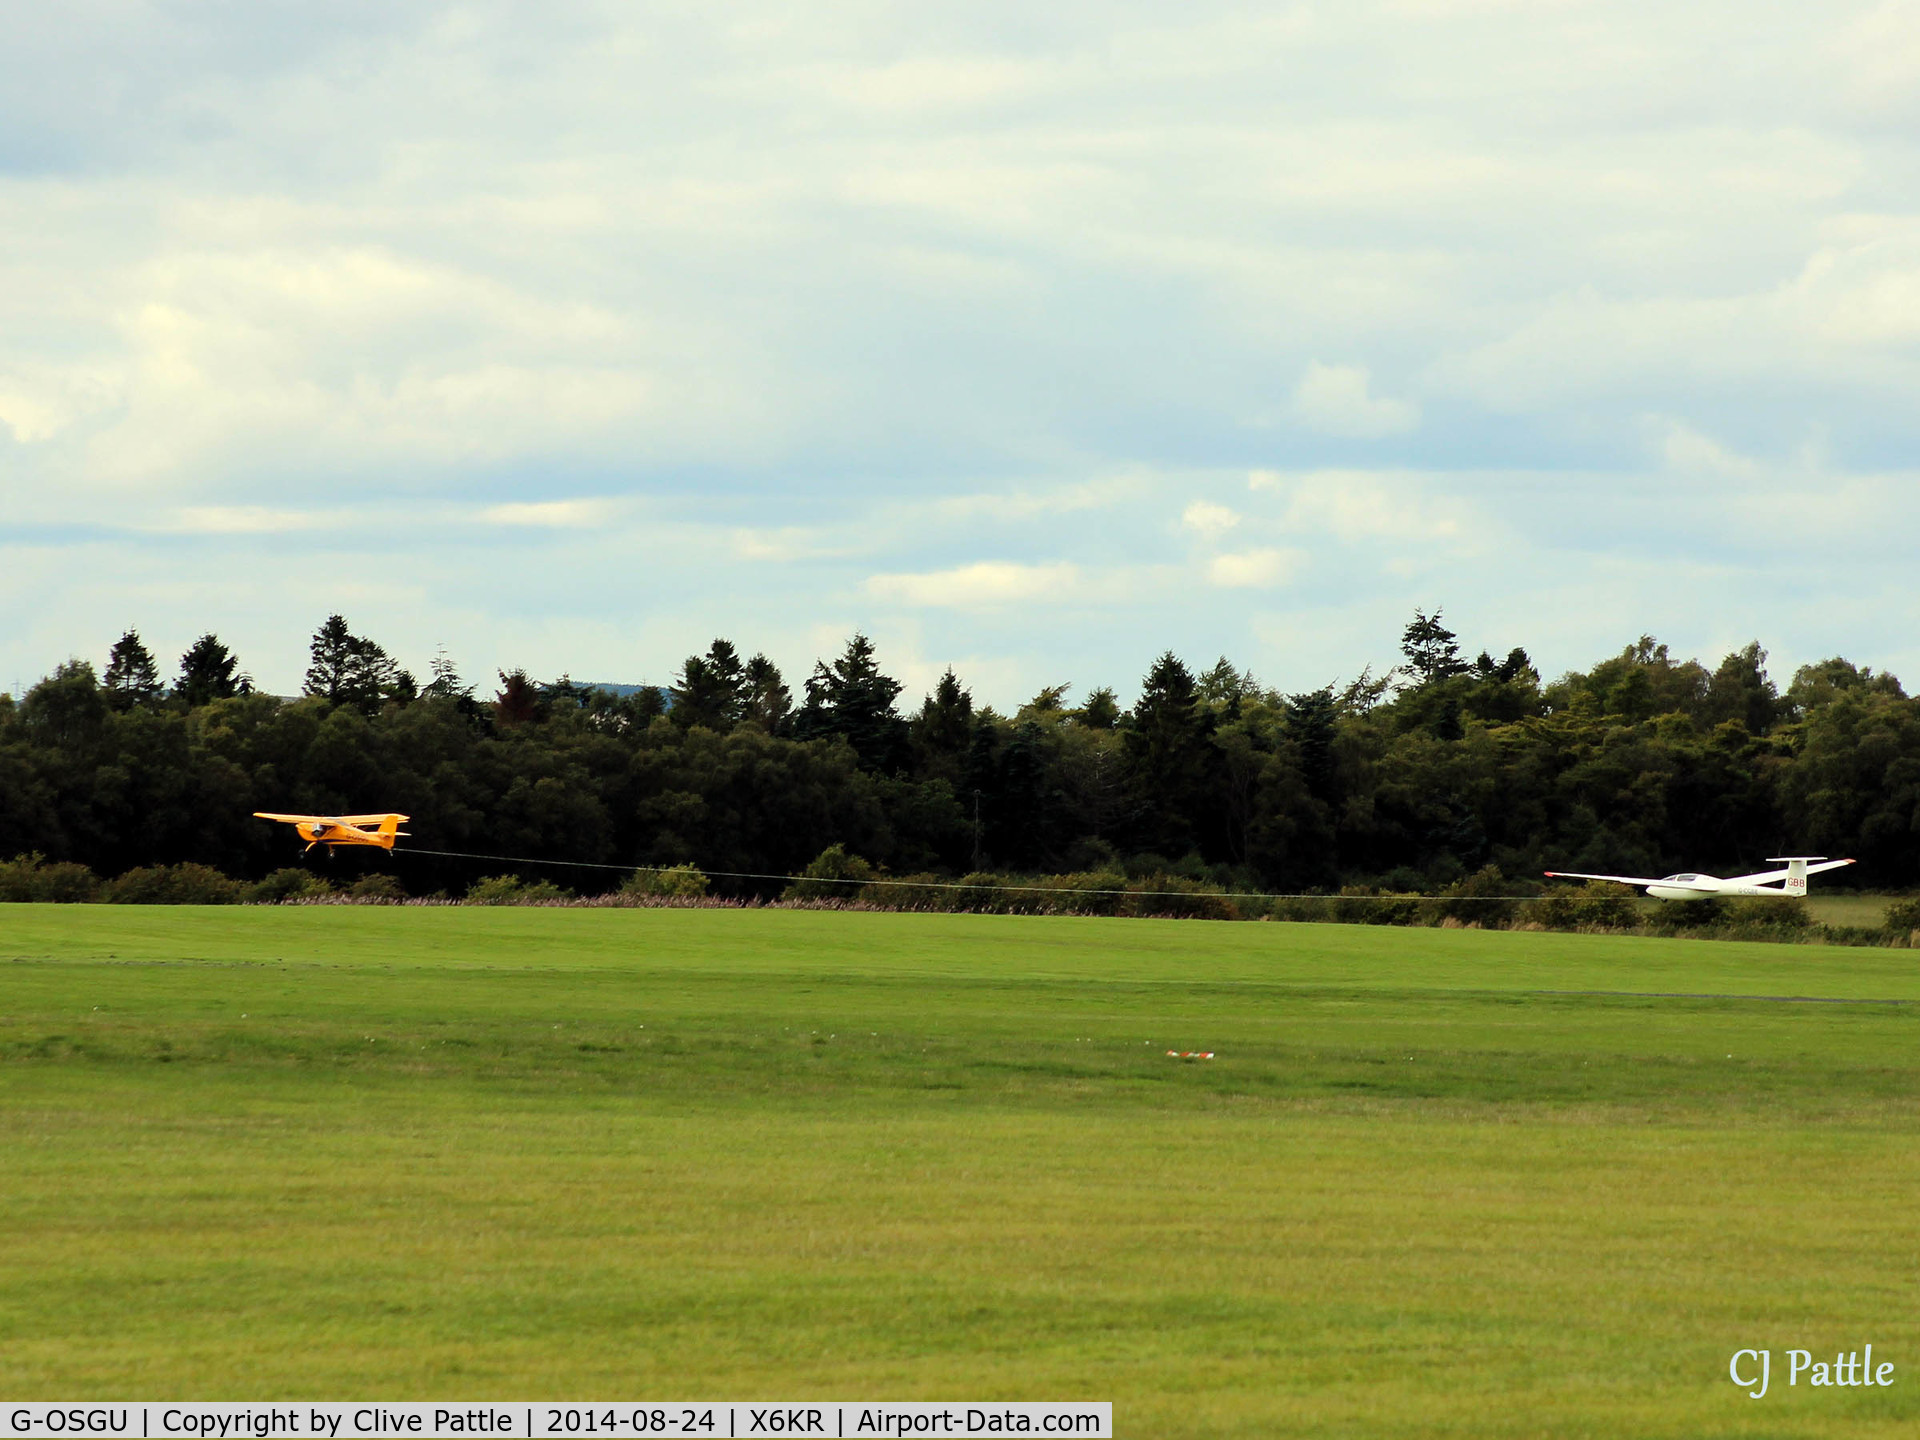 G-OSGU, 2014 Aeropro Eurofox 912(S) C/N LAA 376-15214, OSGU seen in action at Portmoak, Kinross, Scotland launching aero-tow of G-CGBB.